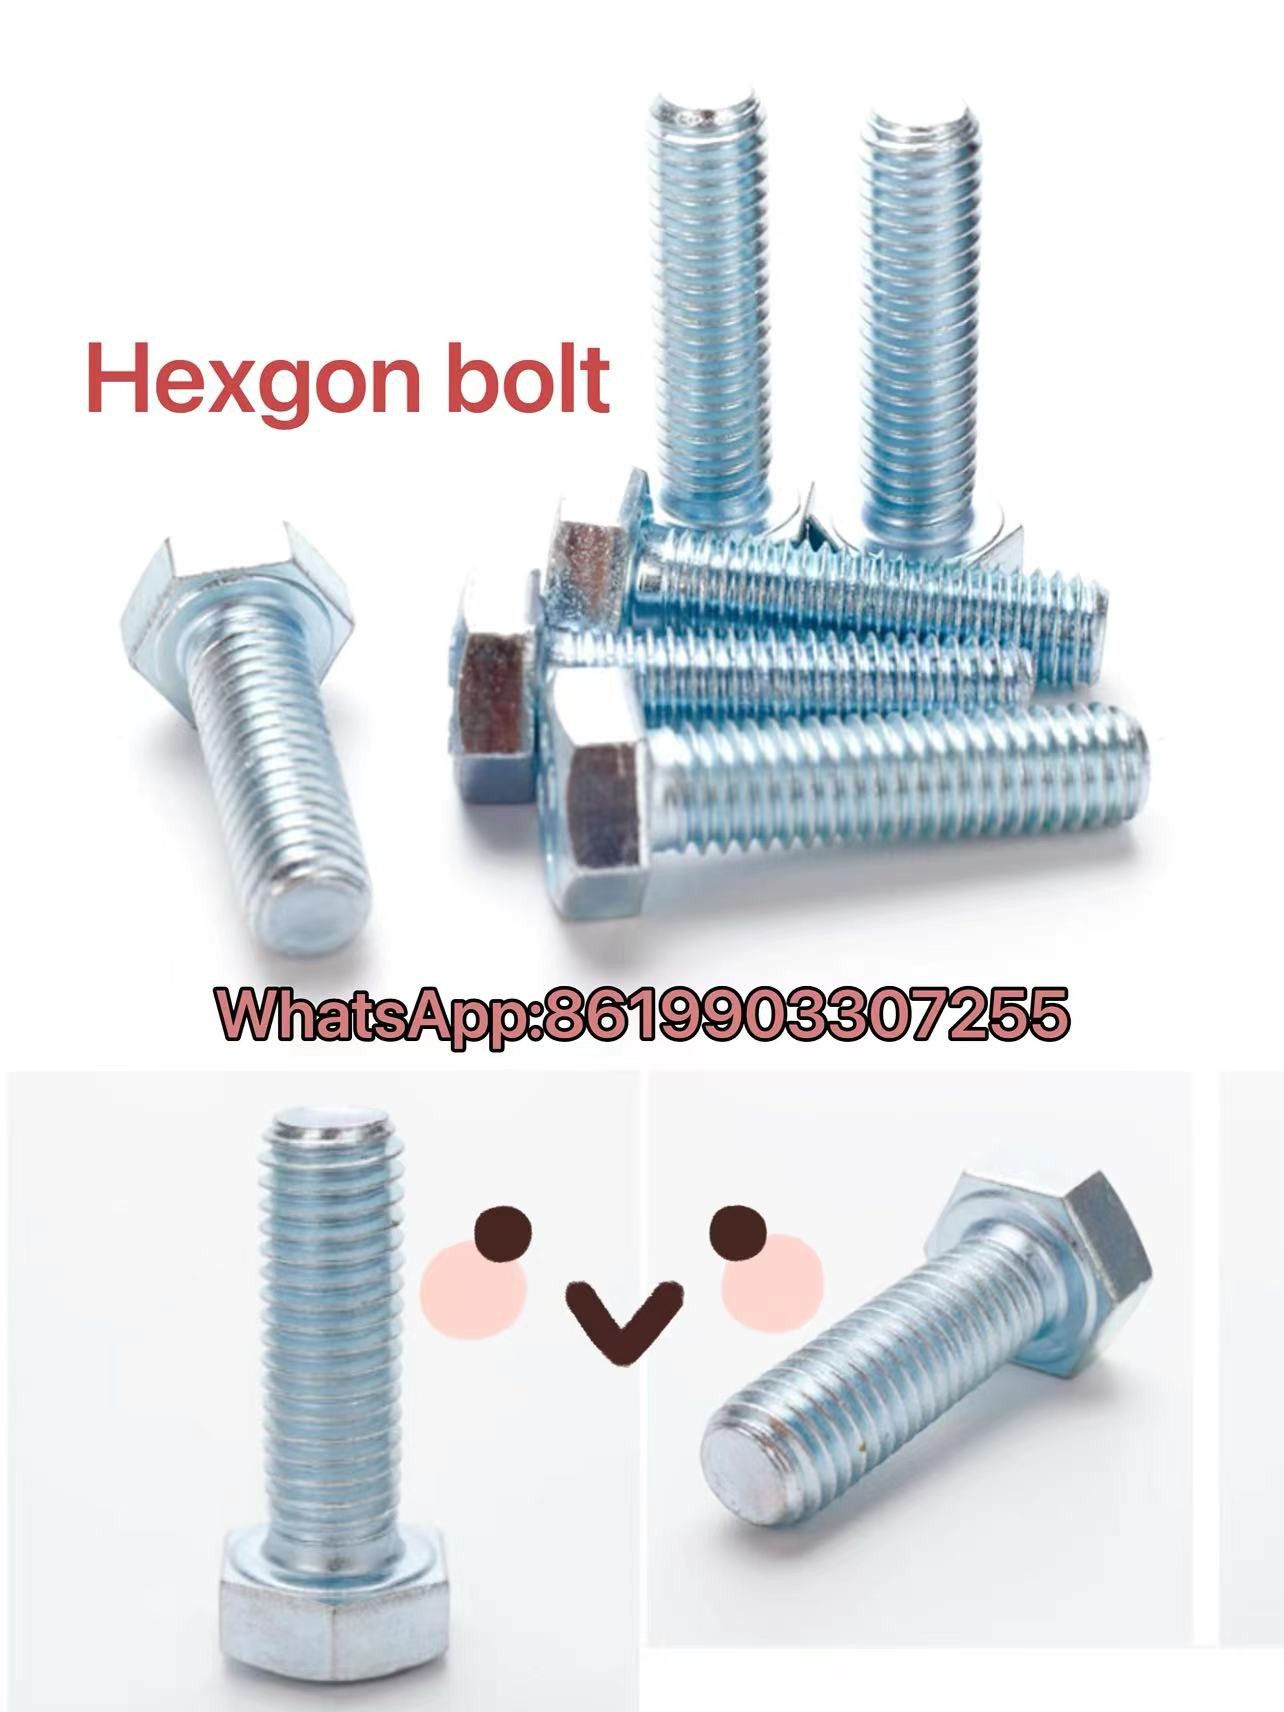 hexgon bolt fastener factory support costomization Whatsapp 8619903307255-pic_1